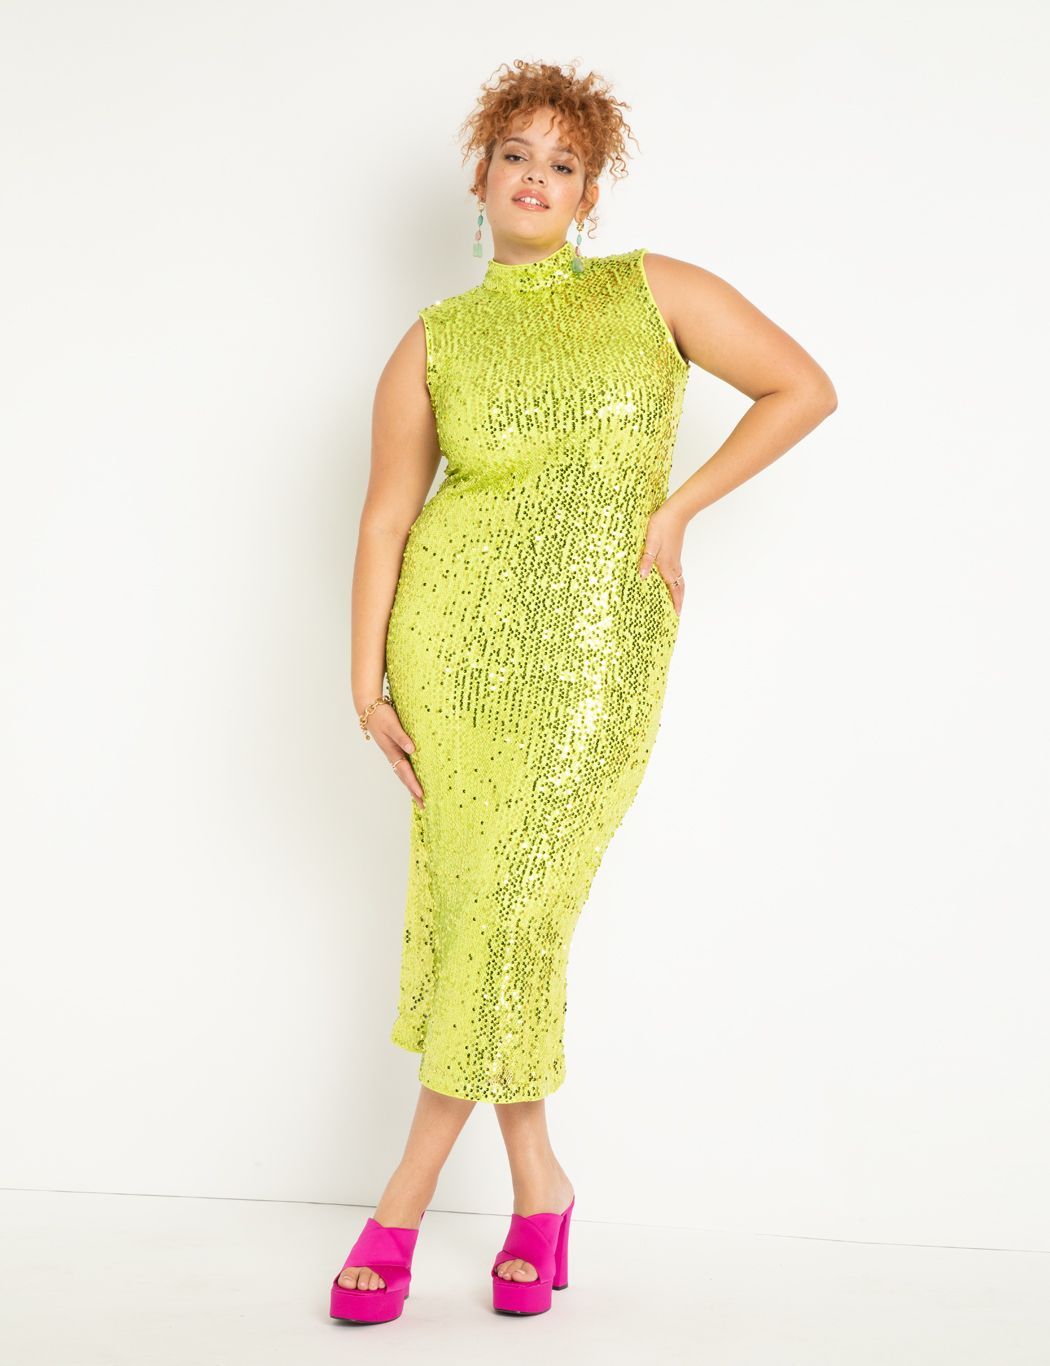 Embellished Netting Dress | Eloquii